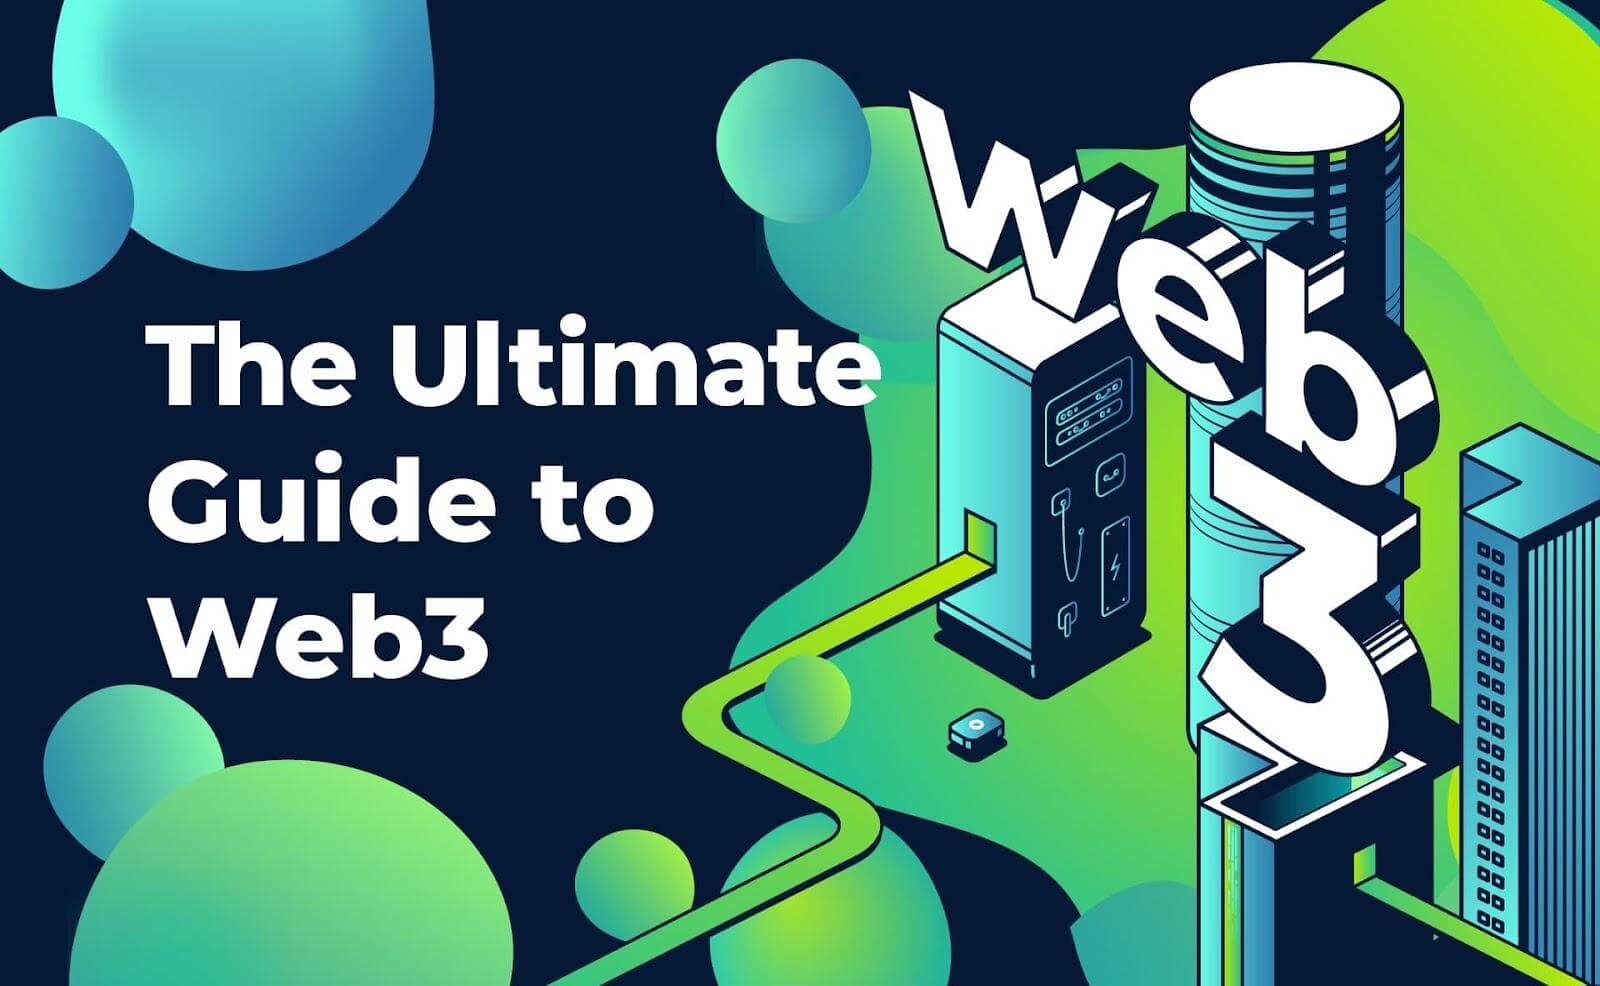 Illustration for Web3 hosting guide